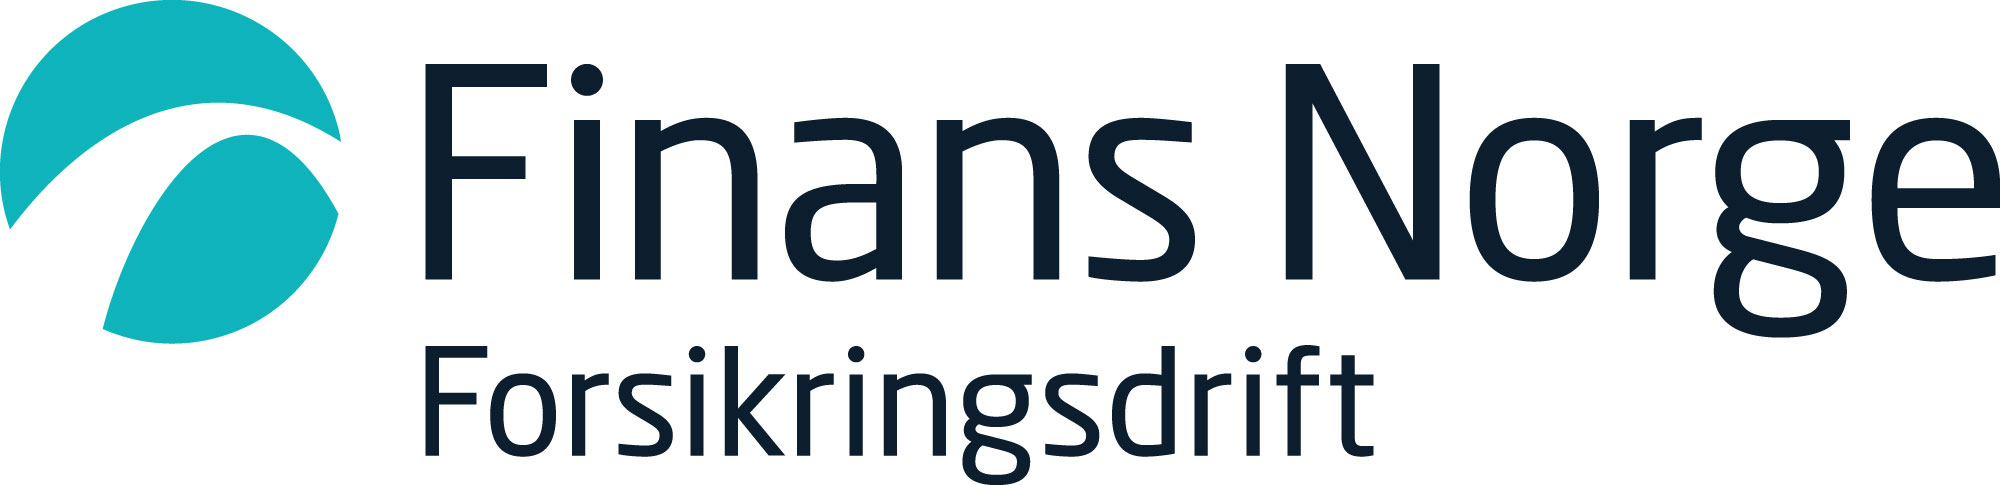 FinansNorge_Forsikringsdrift_Logo_RGB_Pos (003).jpg